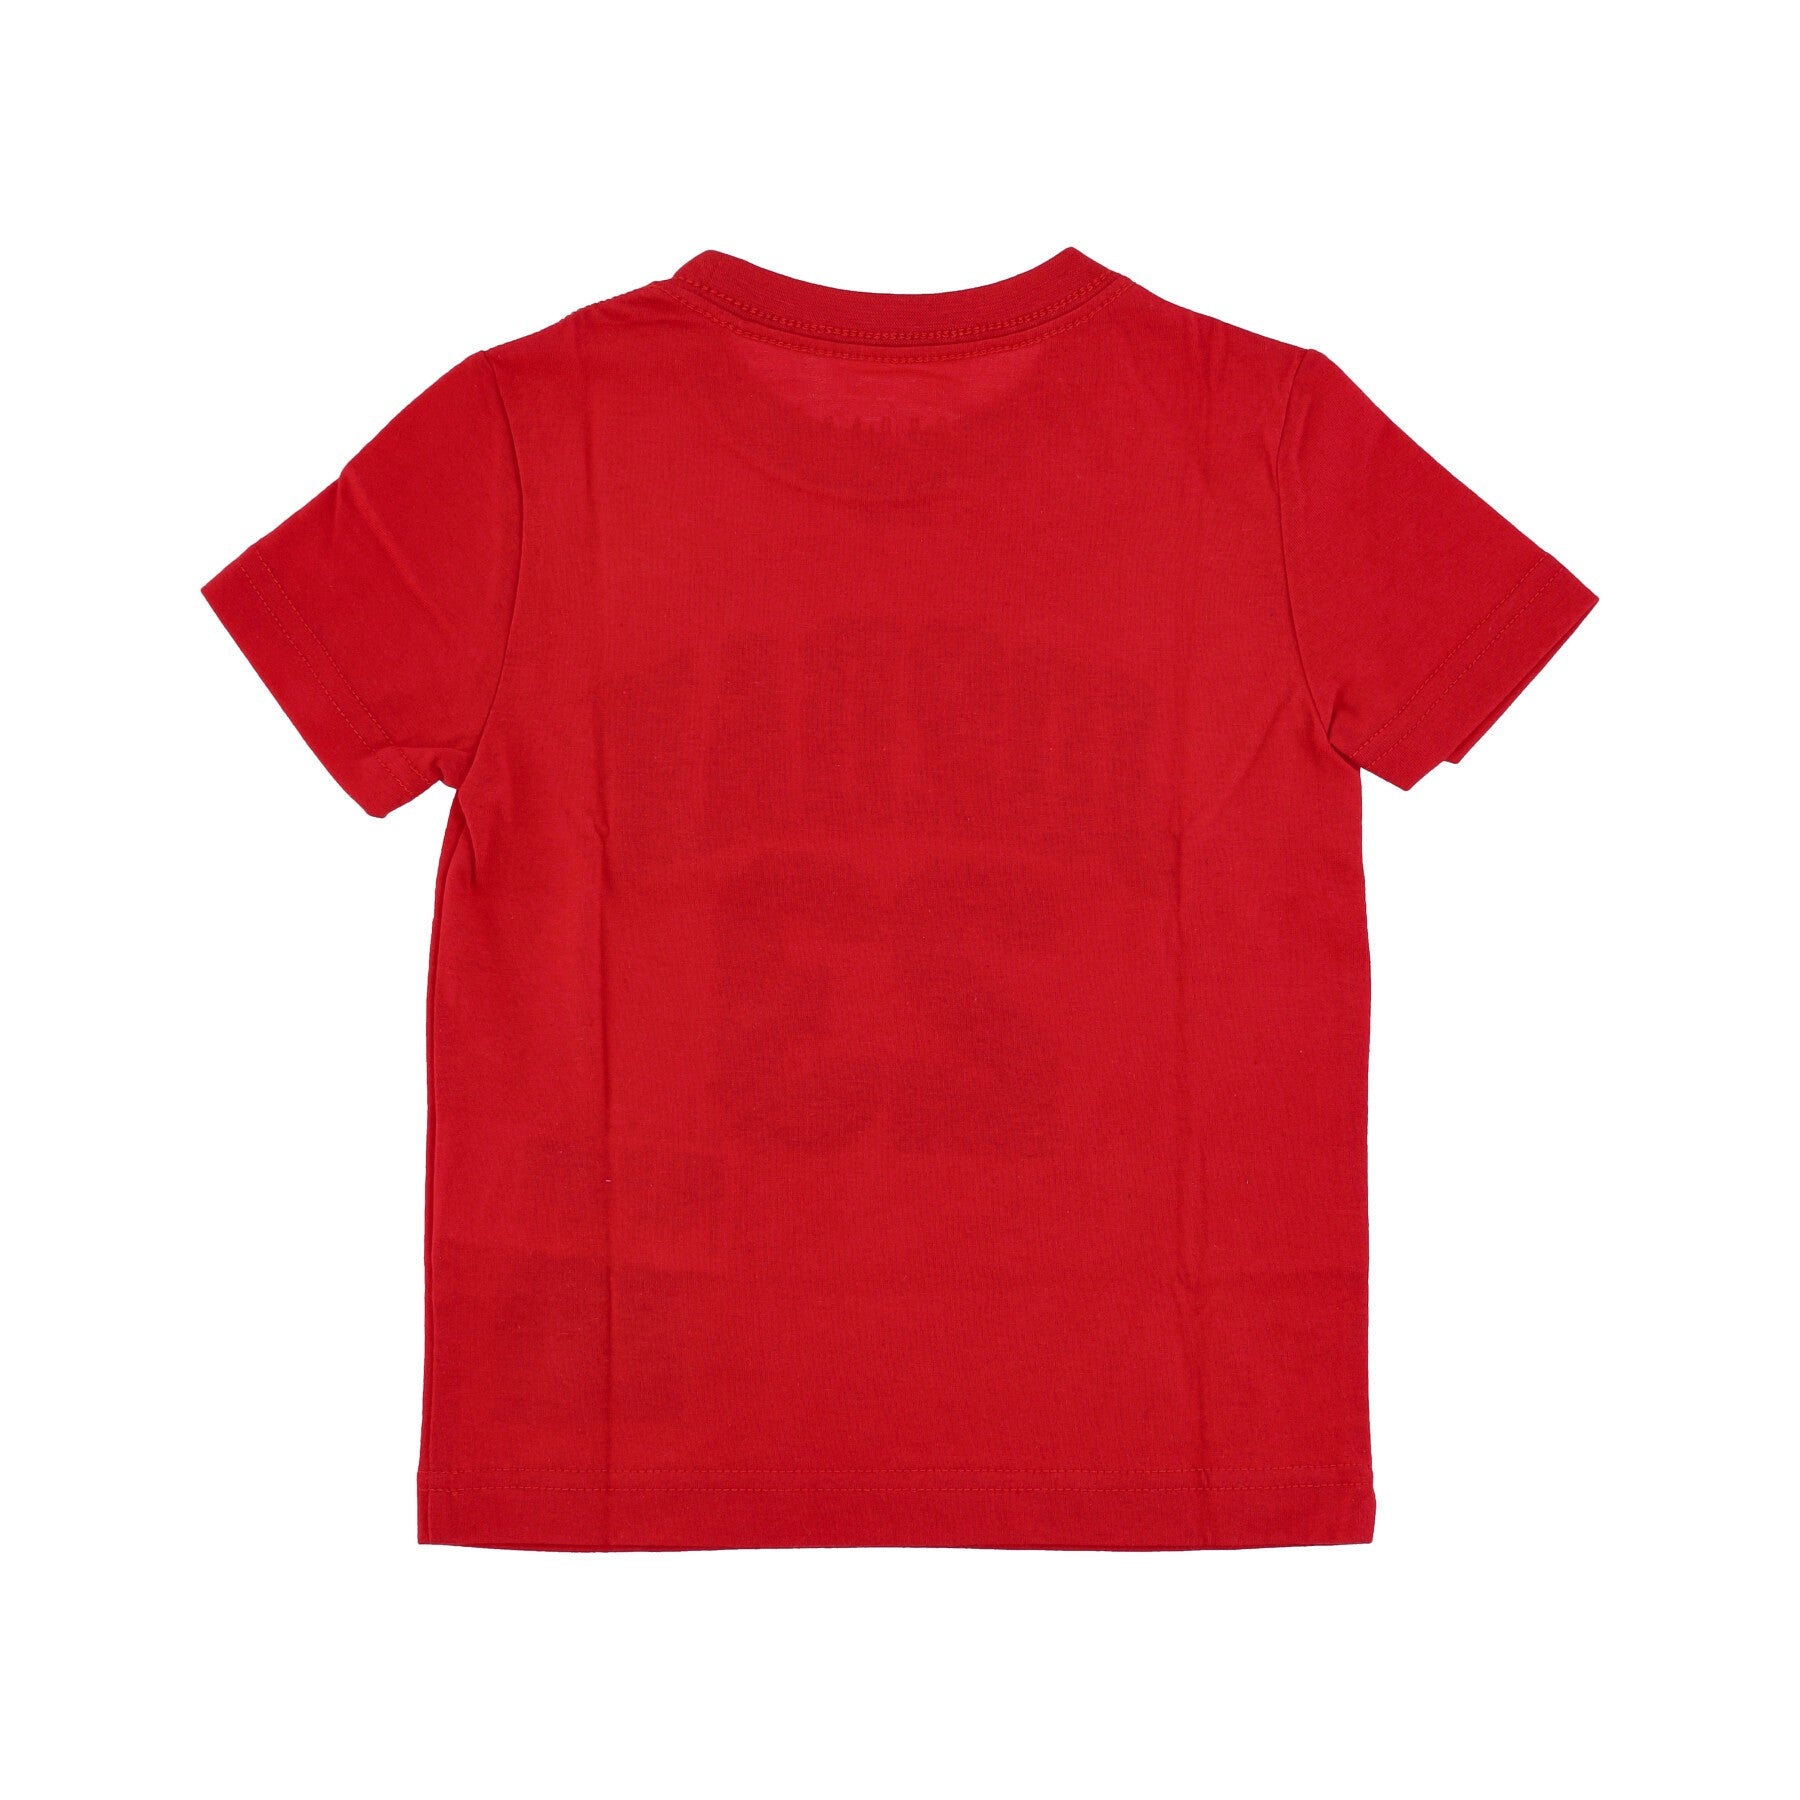 Children's Practice Flight Tee Gym Red T-shirt